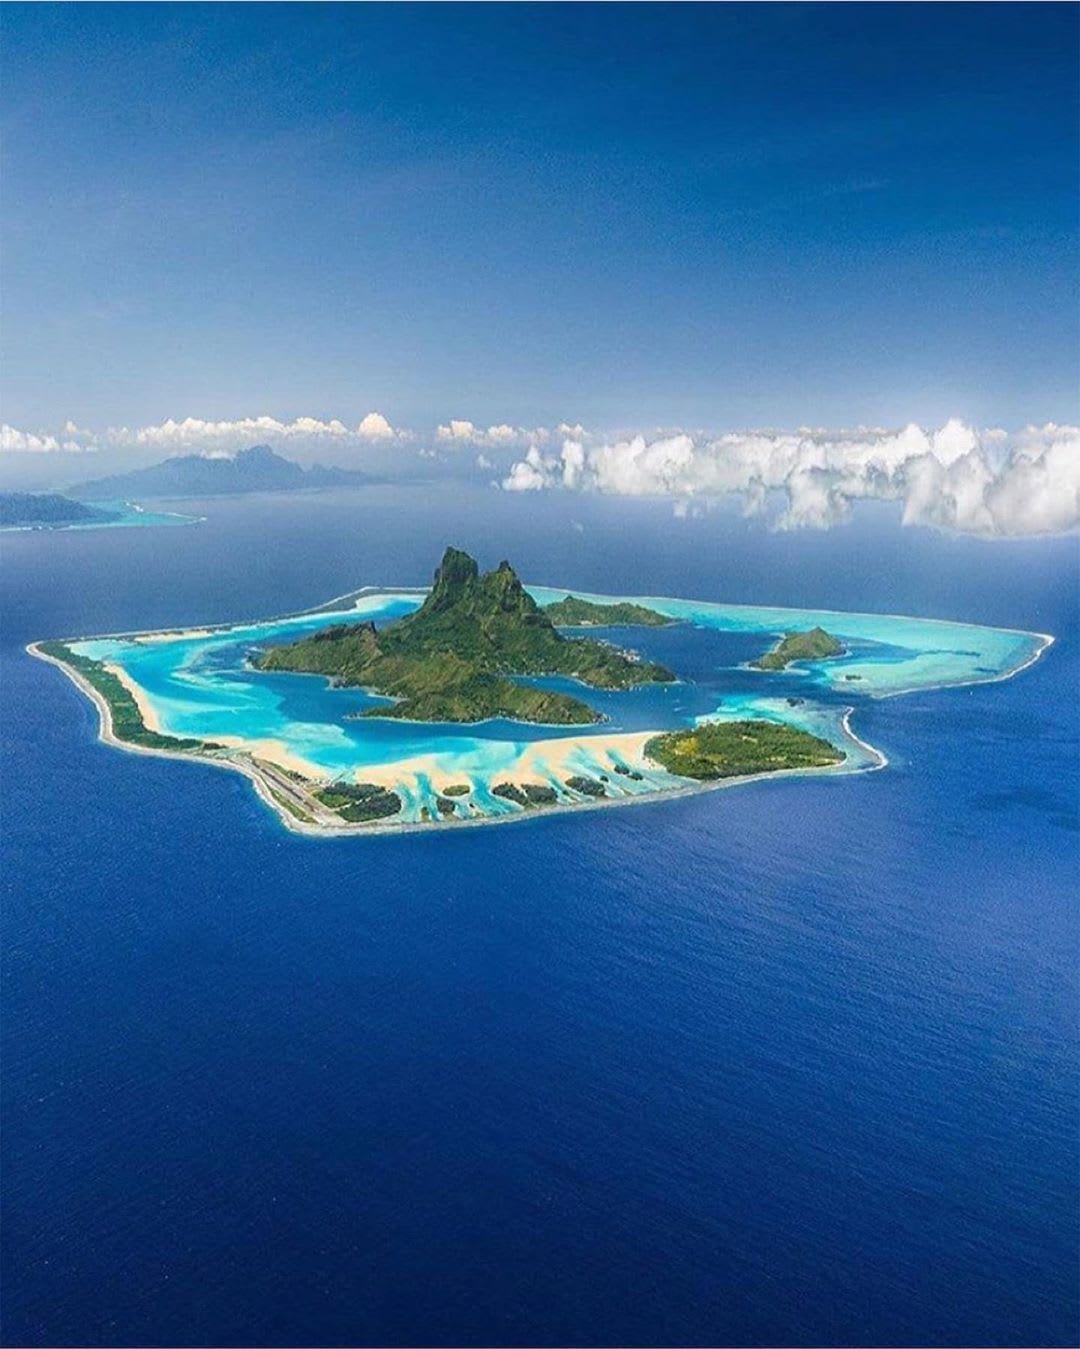 A beautiful view of Bora Bora